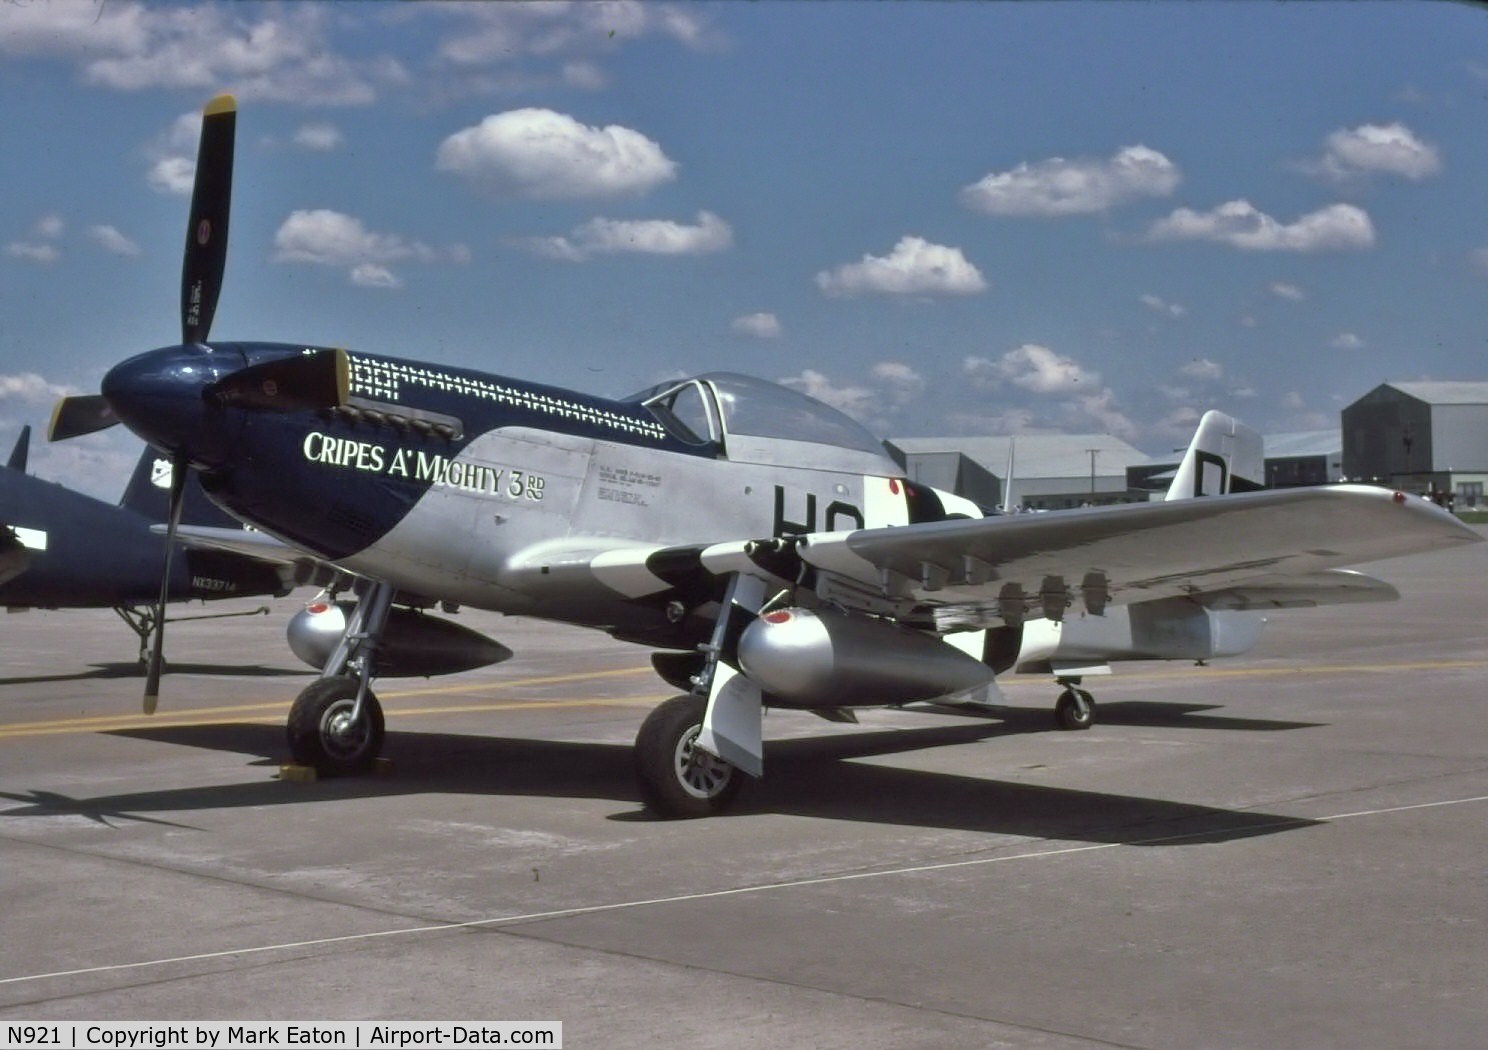 N921, 1945 North American P-51D Mustang C/N 124-48260 (45-11507), Owner: John Schafhausen,Spokane,Washington
Location: Fairchild Air Force Base,Spokane,Wa.
Date: May-1977